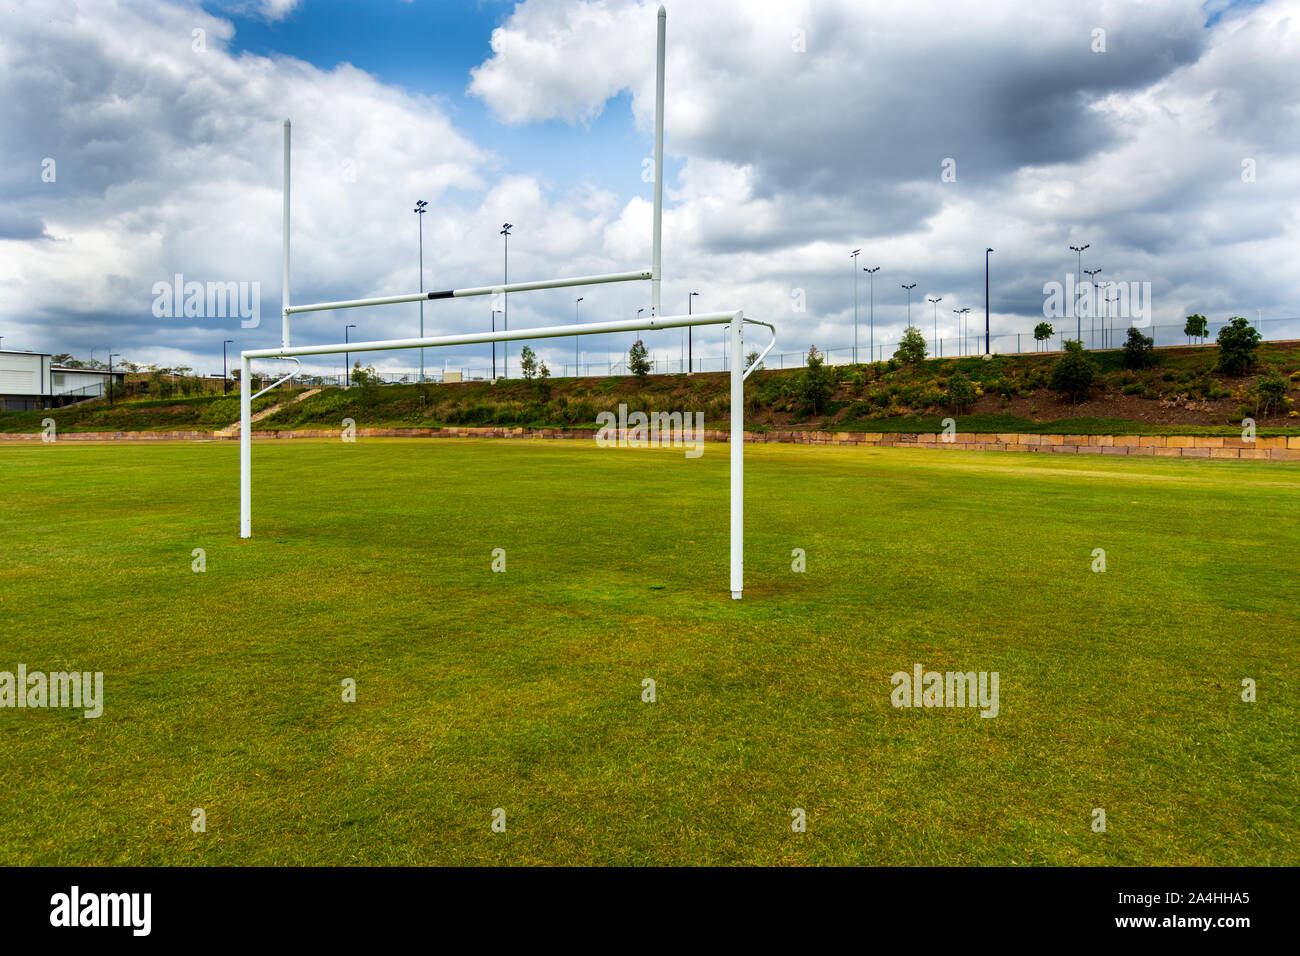 Football Goals on an empty sports ground Stock Photo